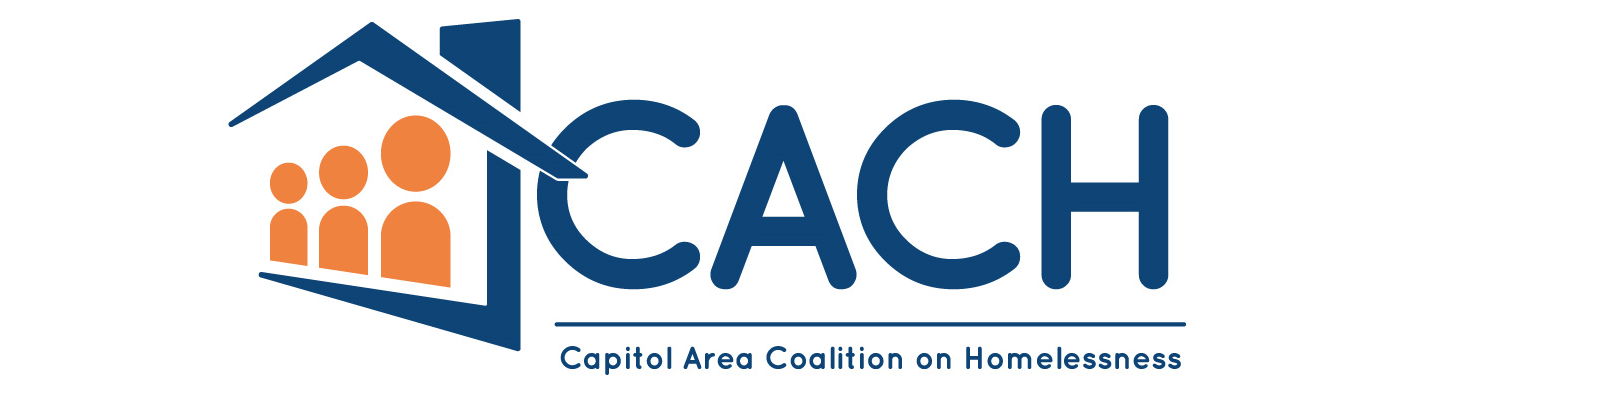 Capital Area Coalition on Homelessness